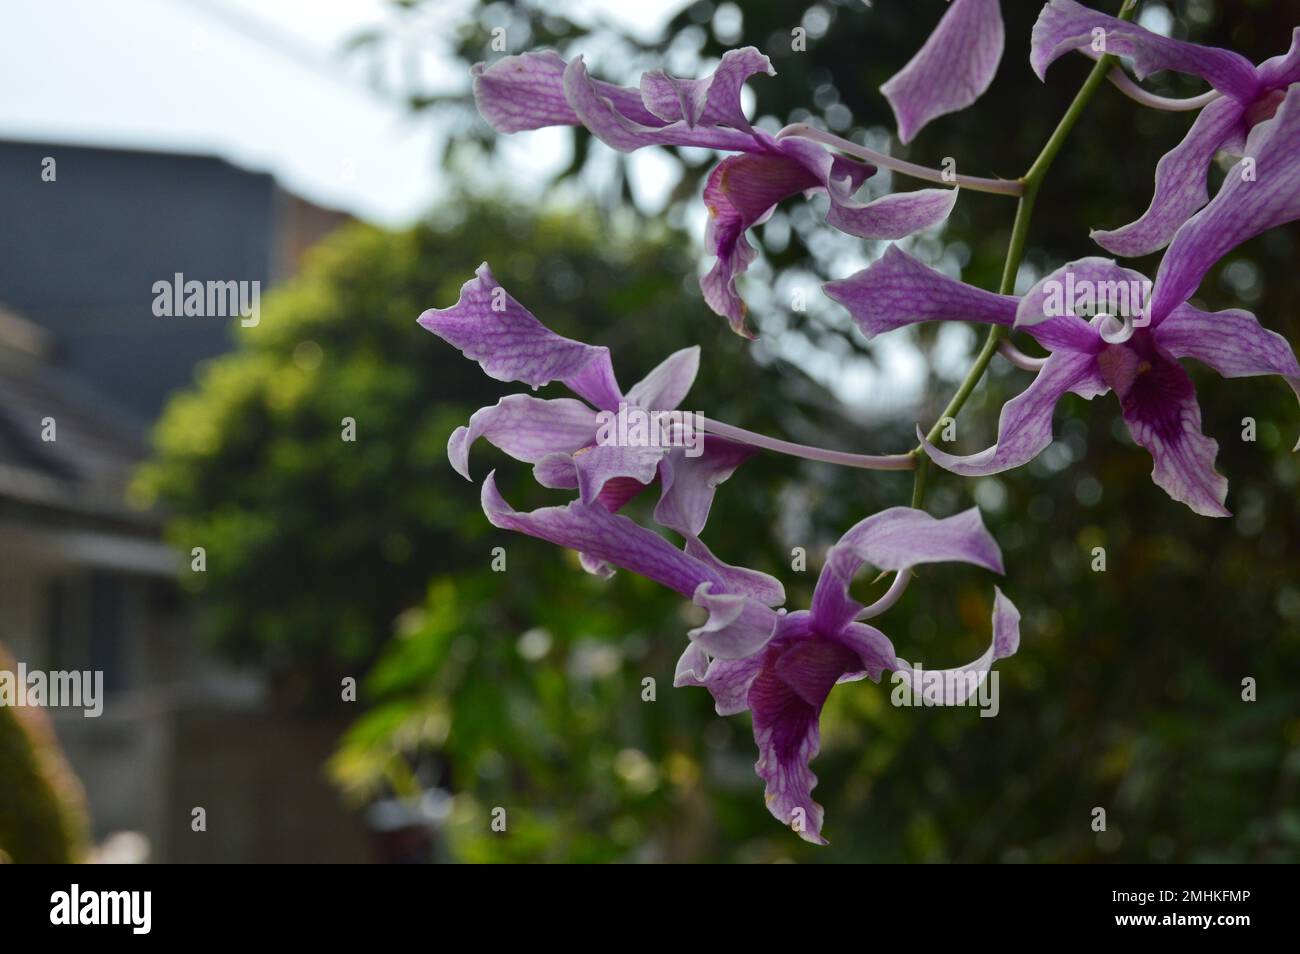 Dendrobium superbiens. Dendrobium orchid ornamental plants in the garden area. Stock Photo